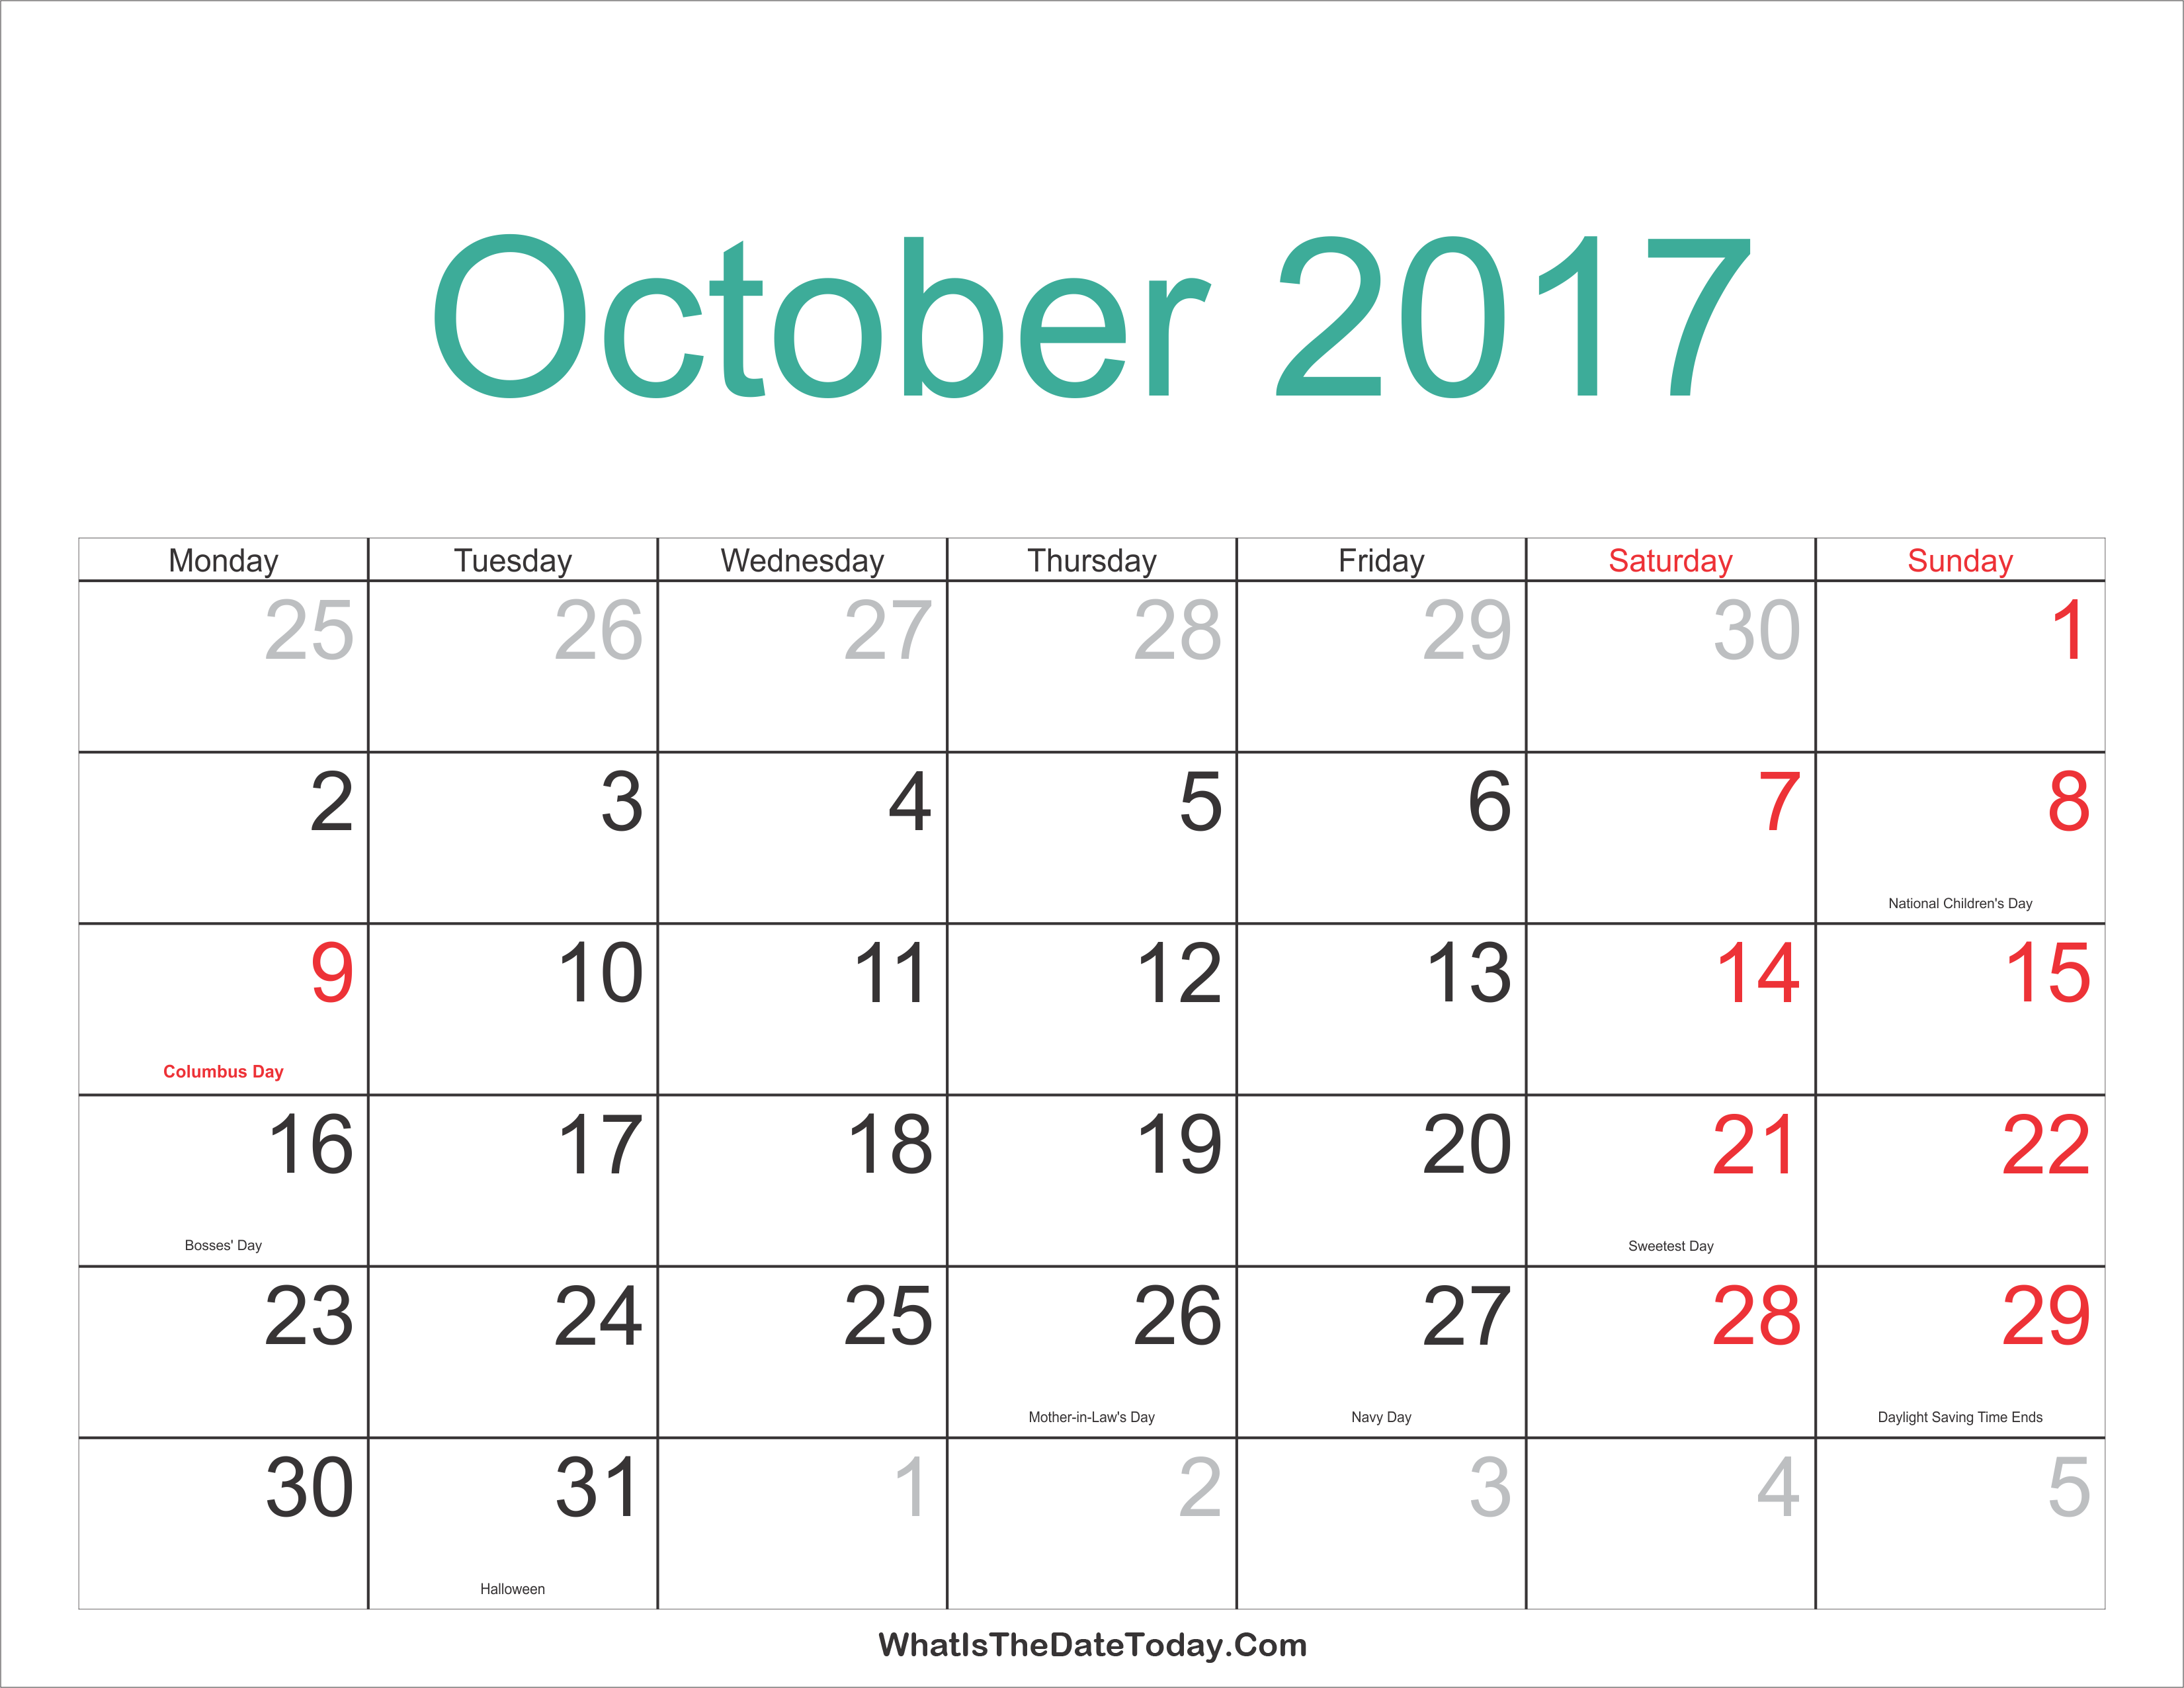 October 2017 Calendar Printable with Holidays Whatisthedatetoday Com